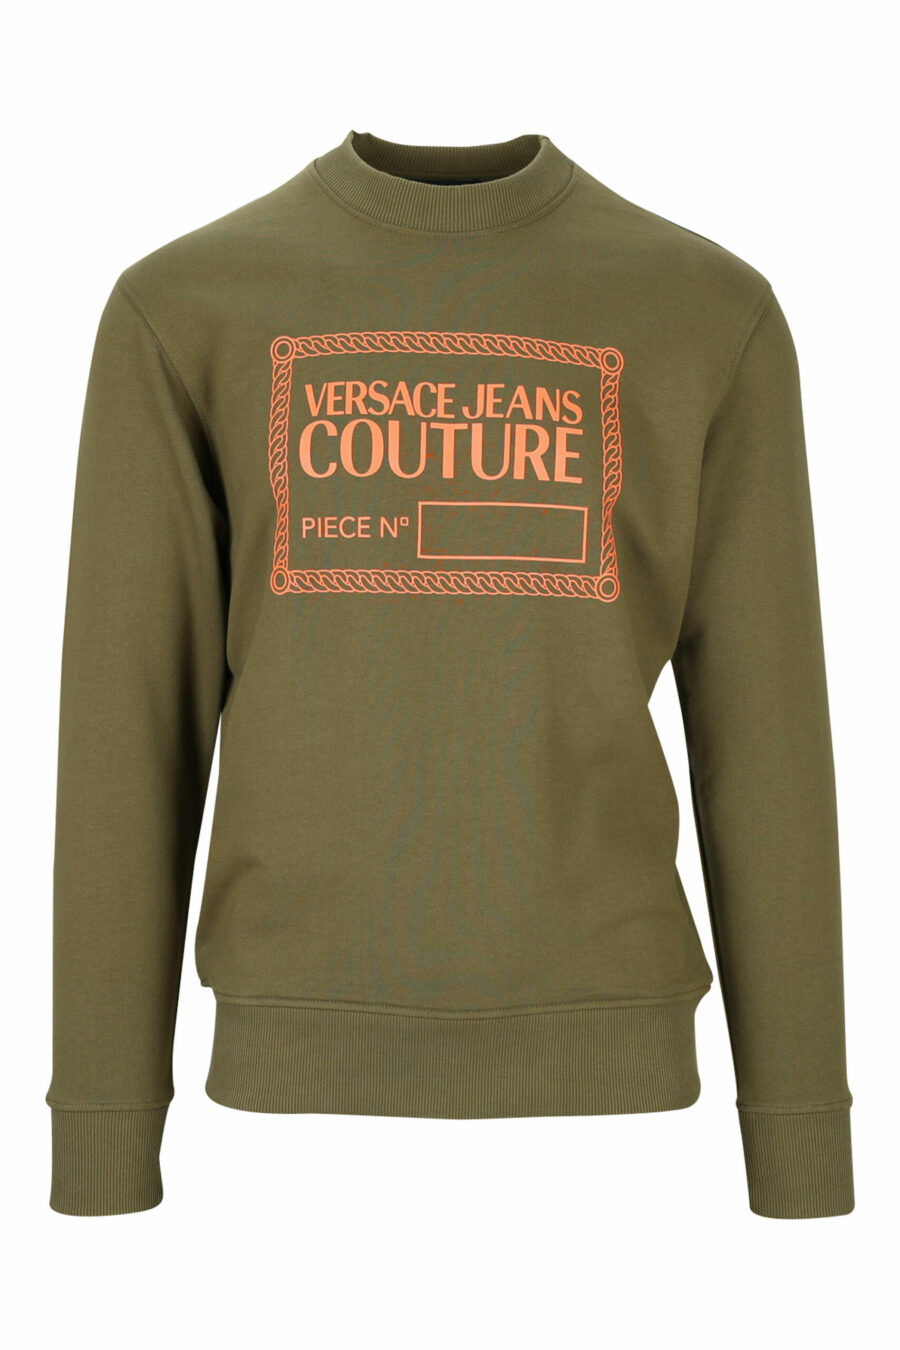 Military green sweatshirt with orange "piece number" maxilogo - 8052019469479 scaled